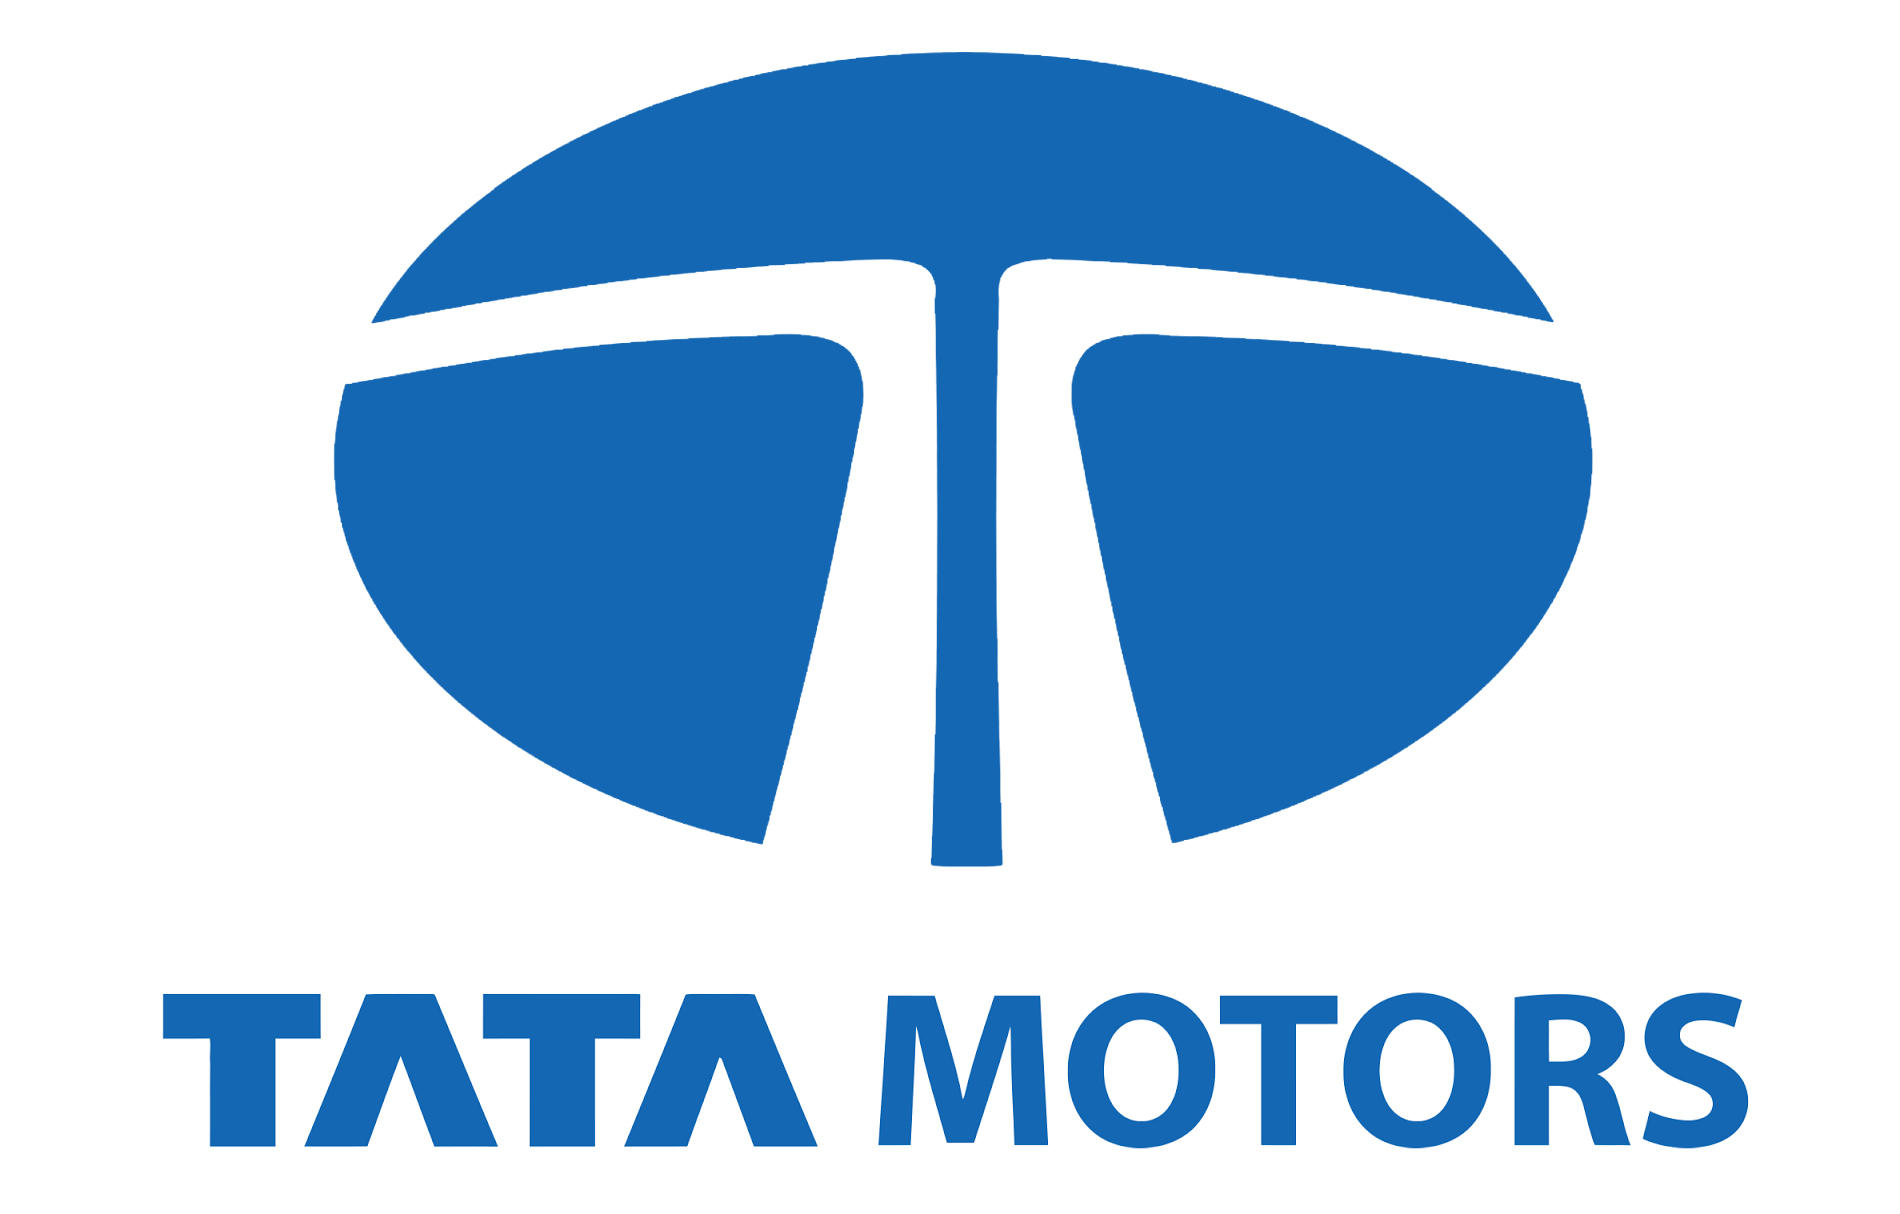 Tata Motors Cars Showroom - LuxonTata - Logo